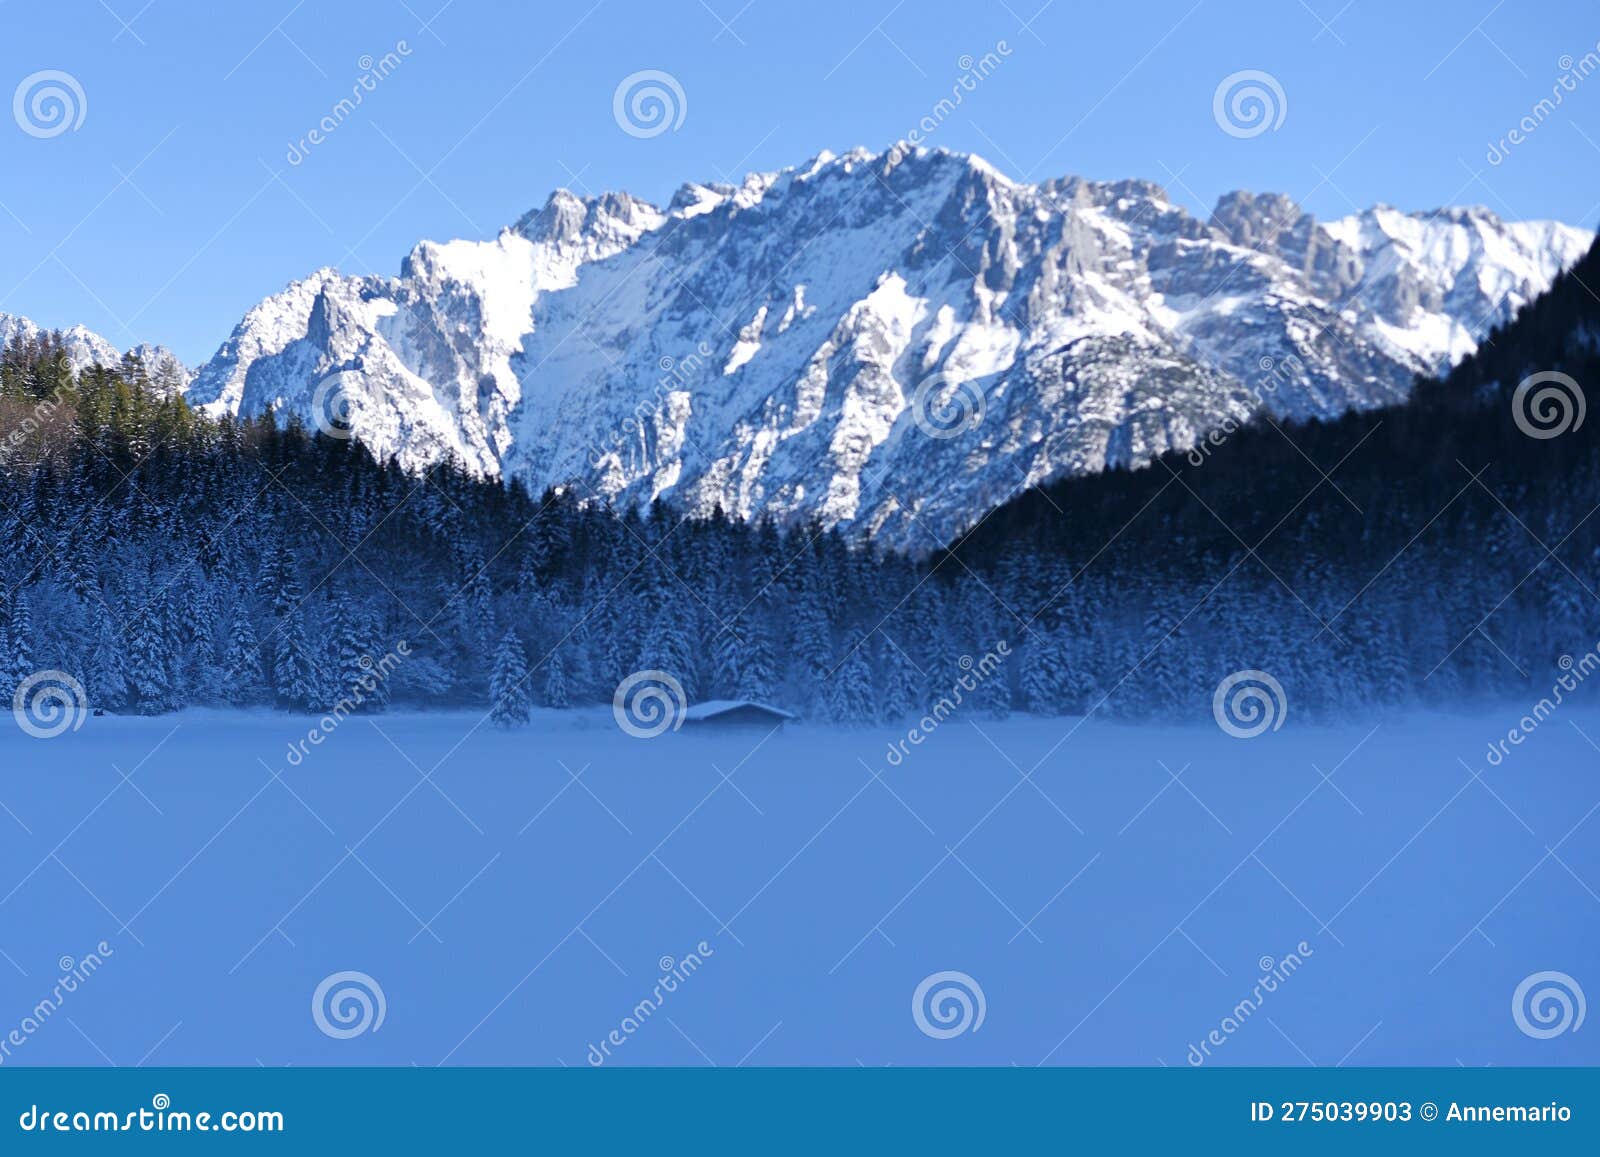 winter wonderland landscape on the lake ferchensee in bavaria, germany